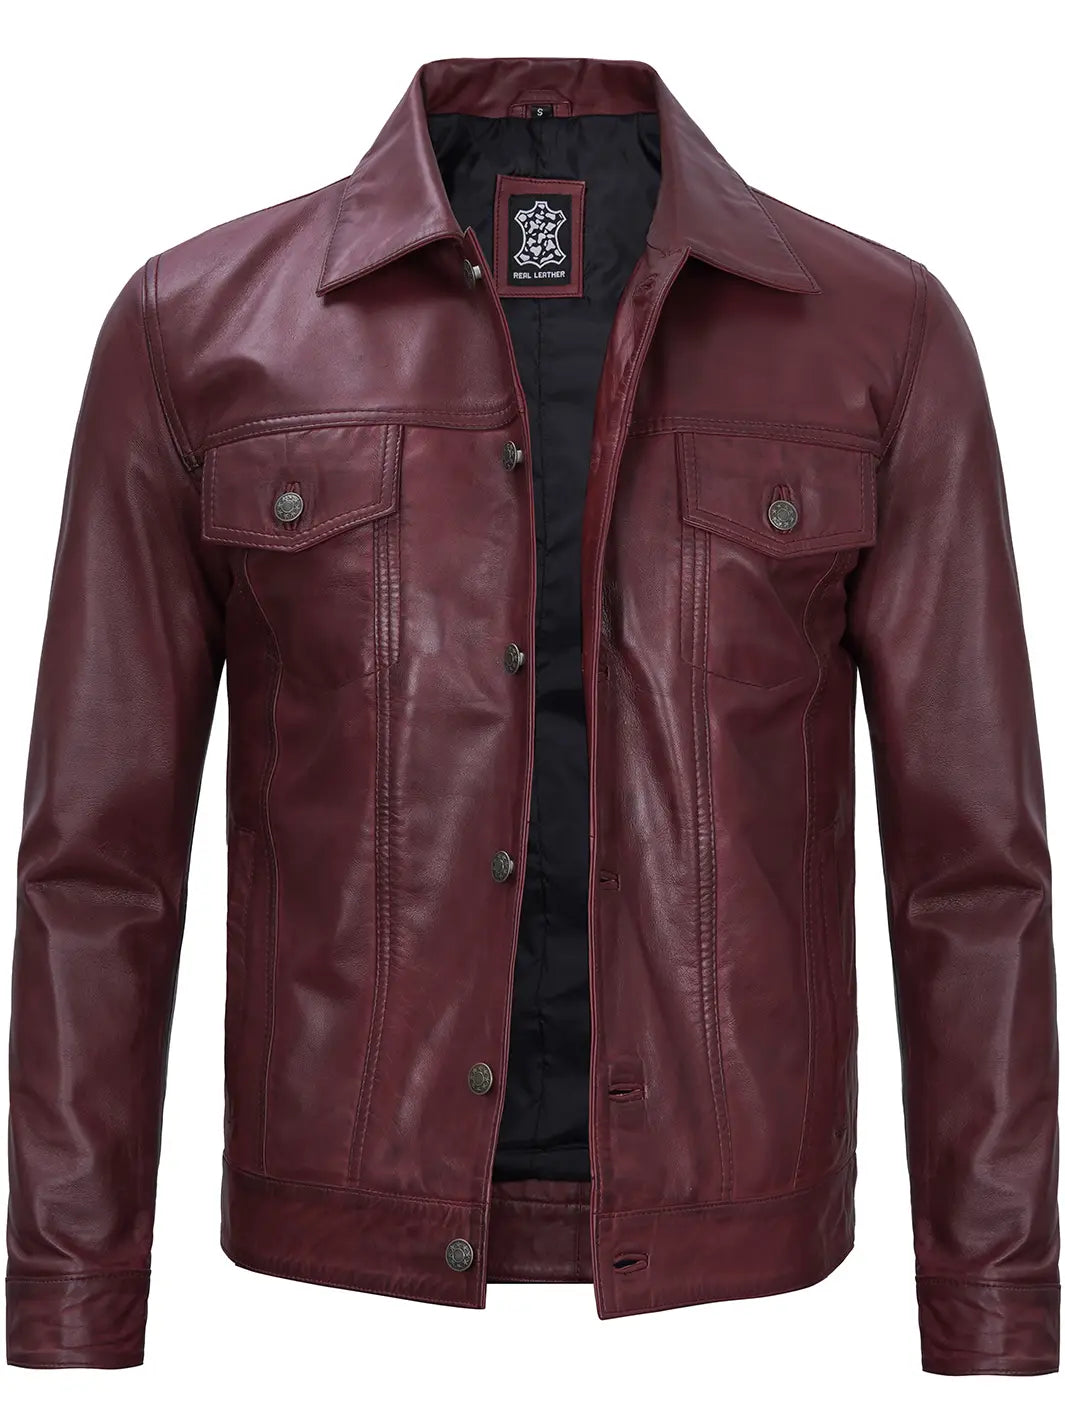 Mens maroon real leather jacket